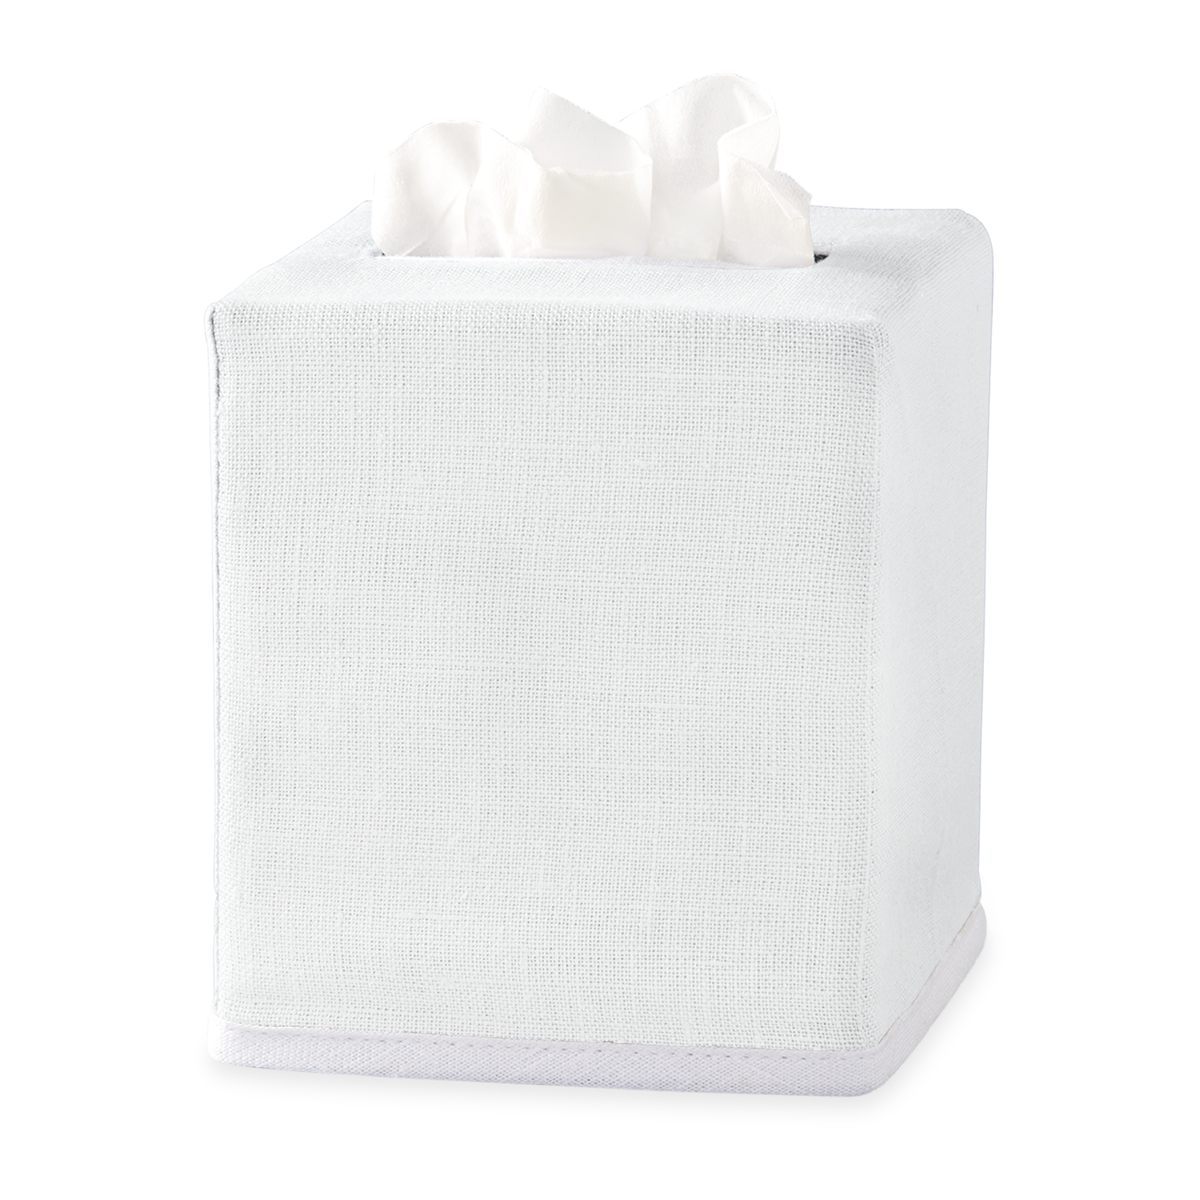 White Matouk Chelsea Linen Tissue Box Cover Against White Background